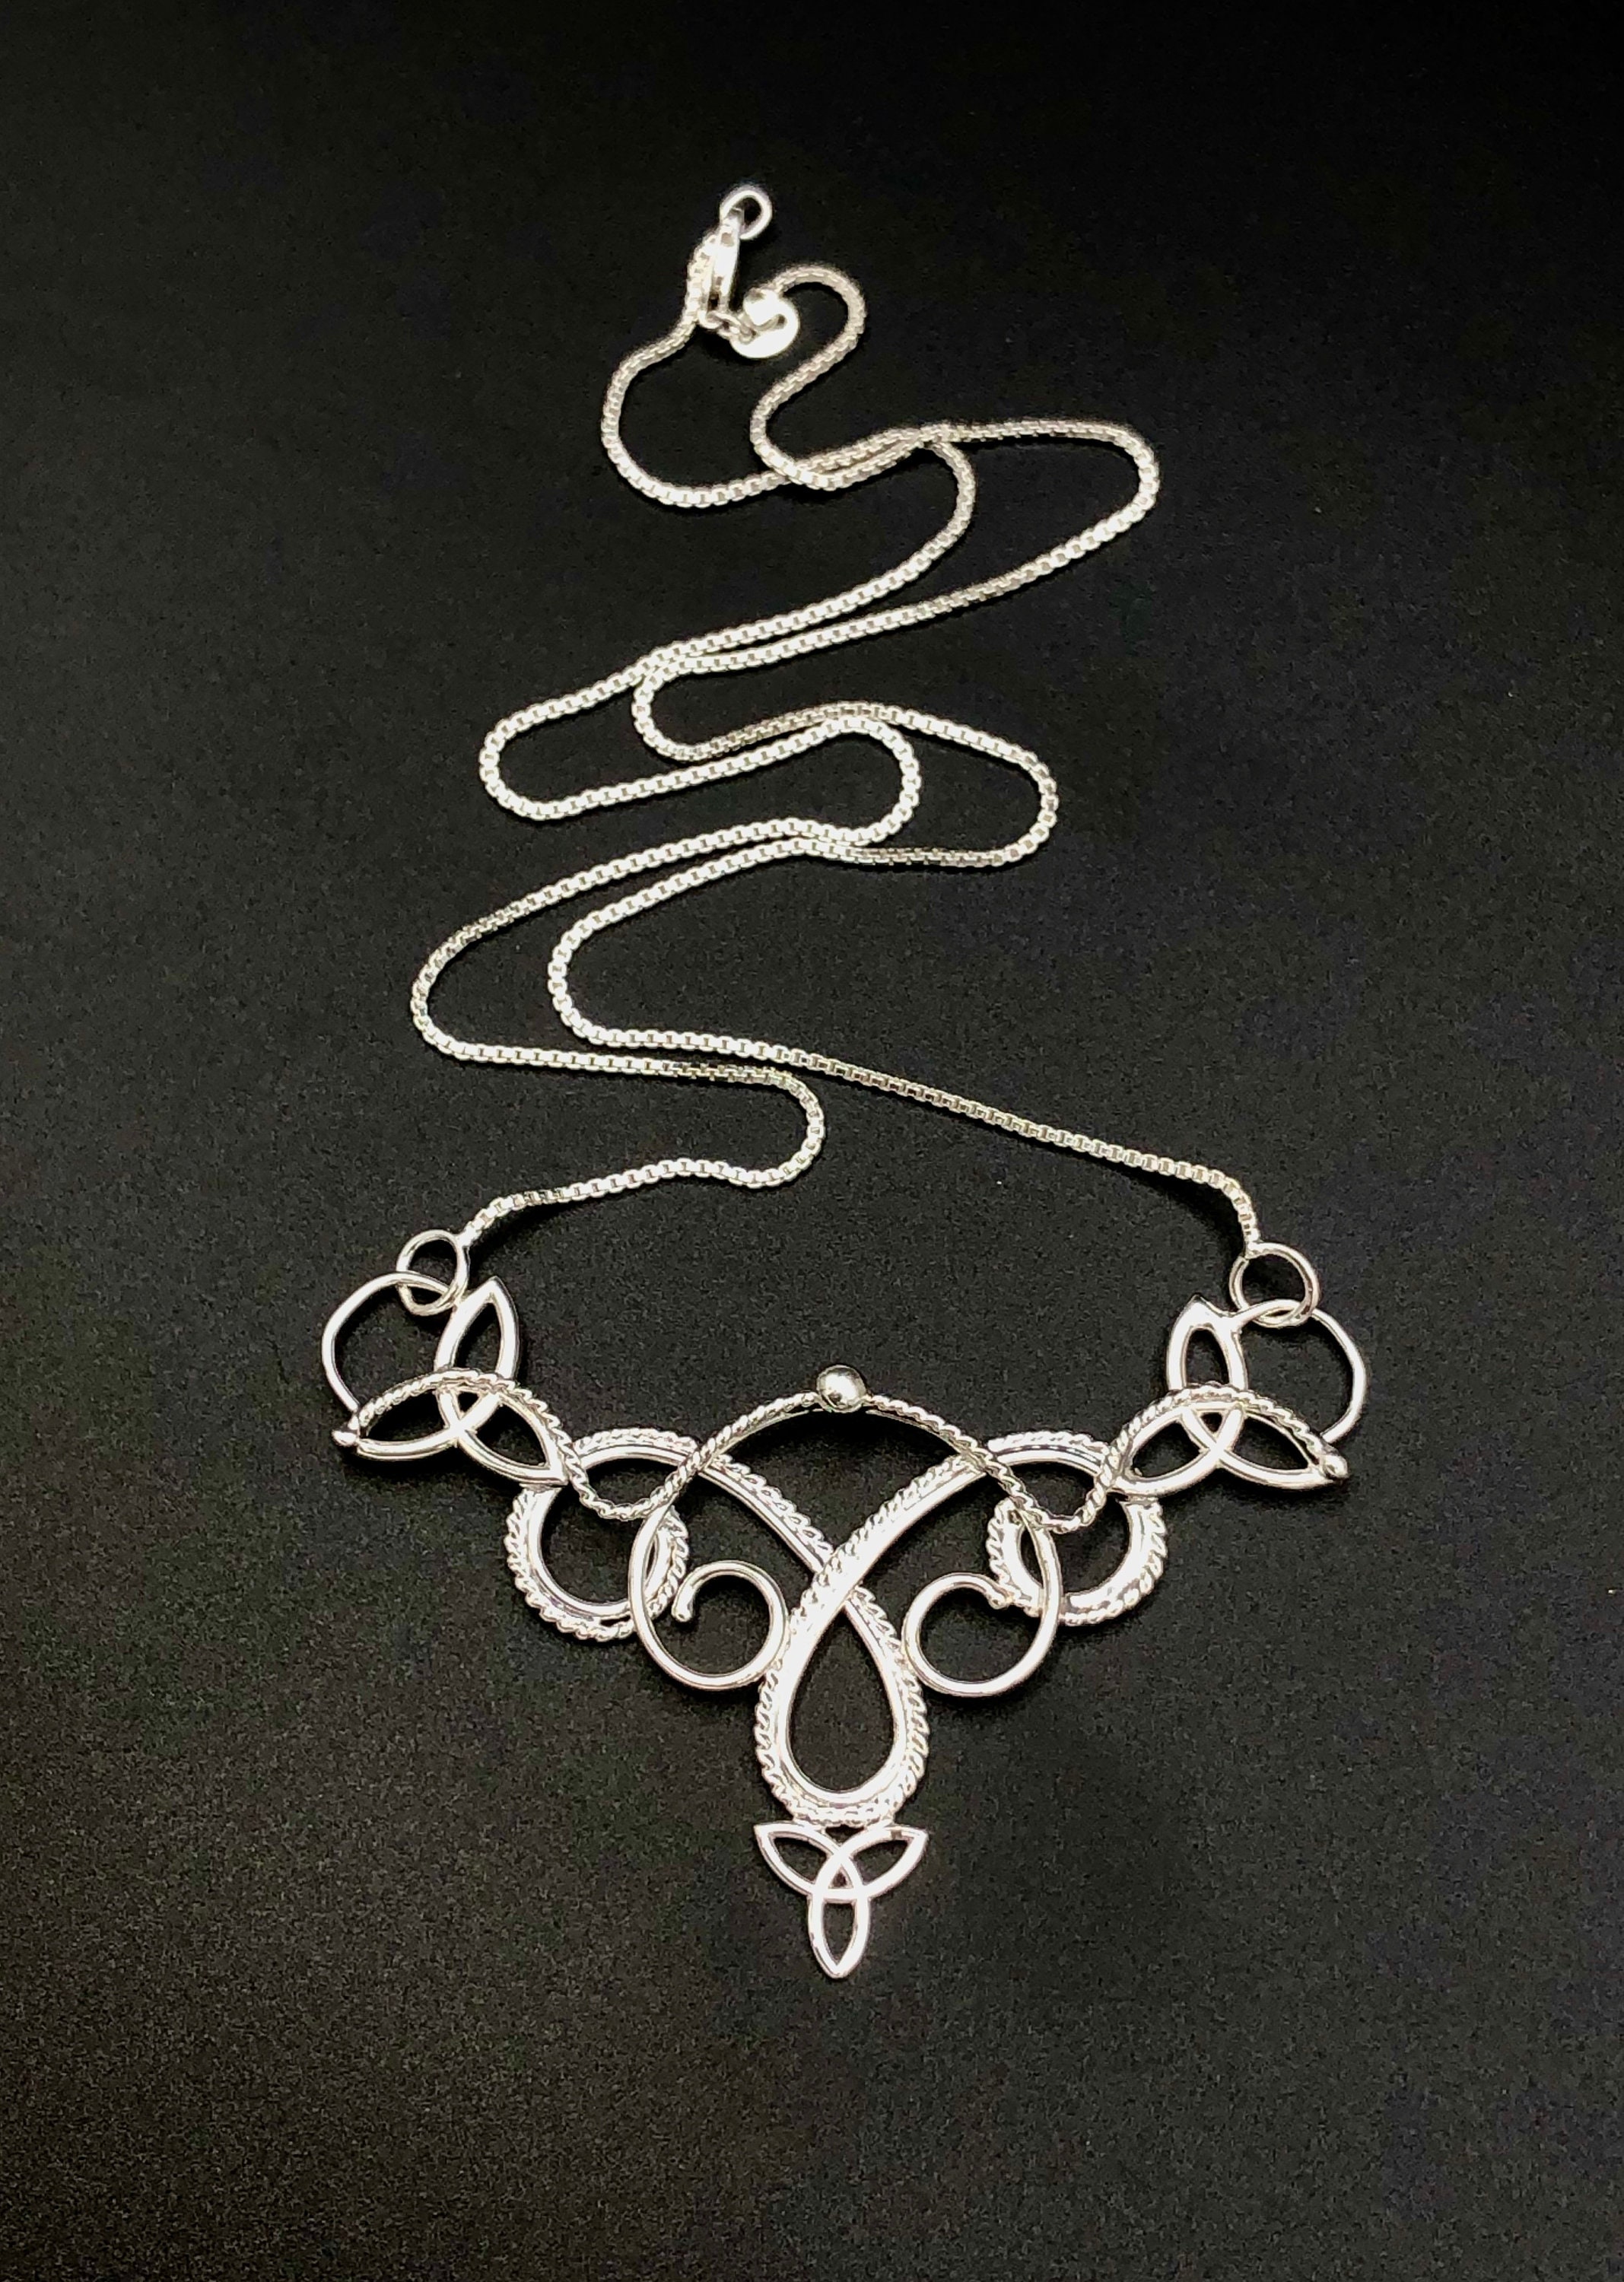 Renaissance Necklace OOAK Necklace Black Celtic Knot Necklace Braided Necklace Shell Pendant Celtic Chain Jewelry Macrame Jewelry